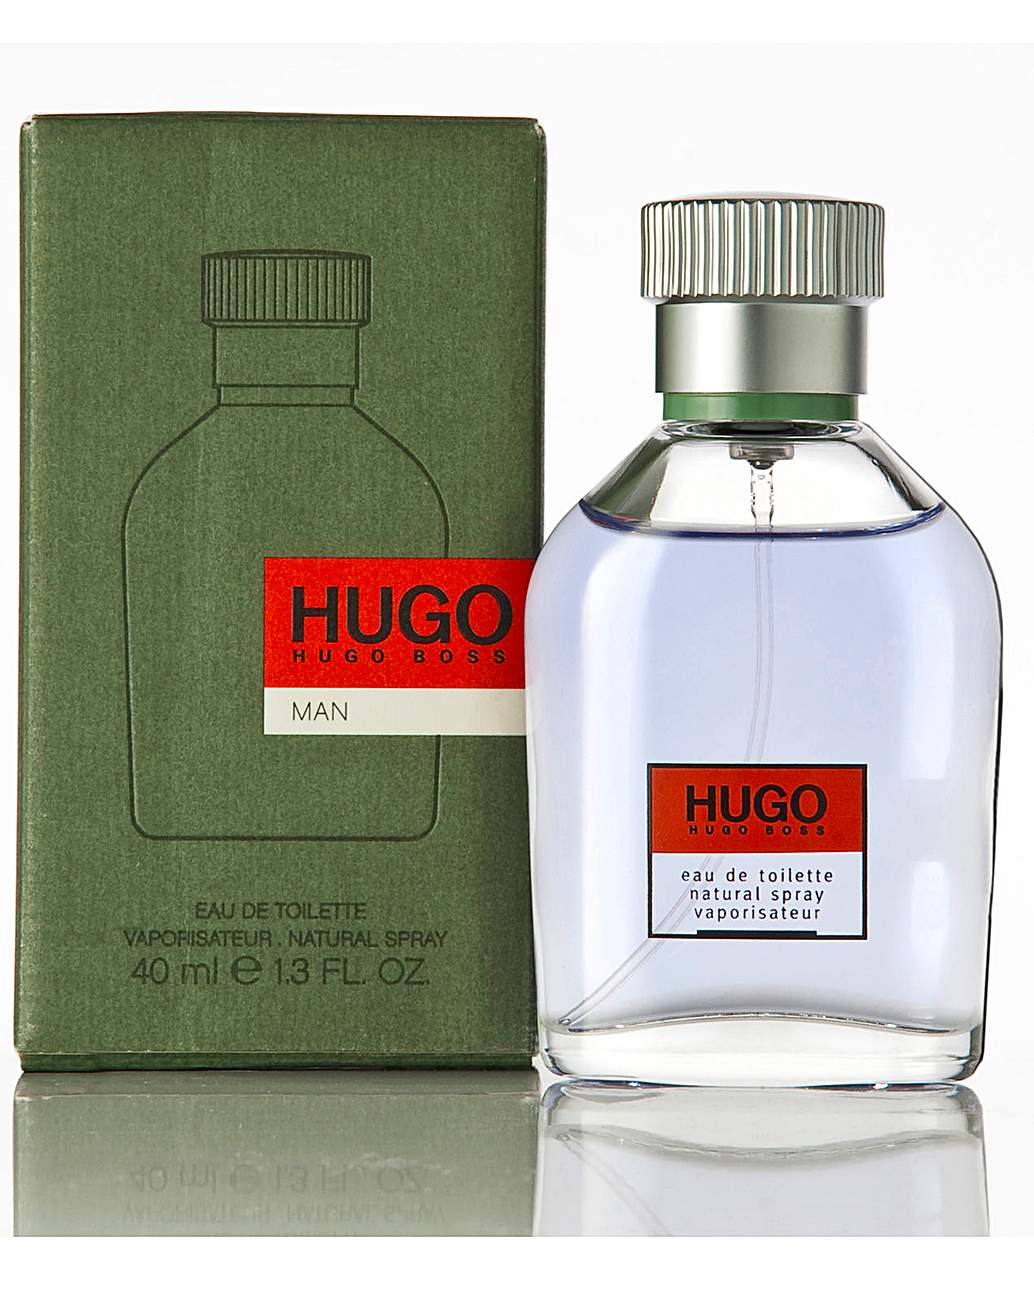 hugo boss price range